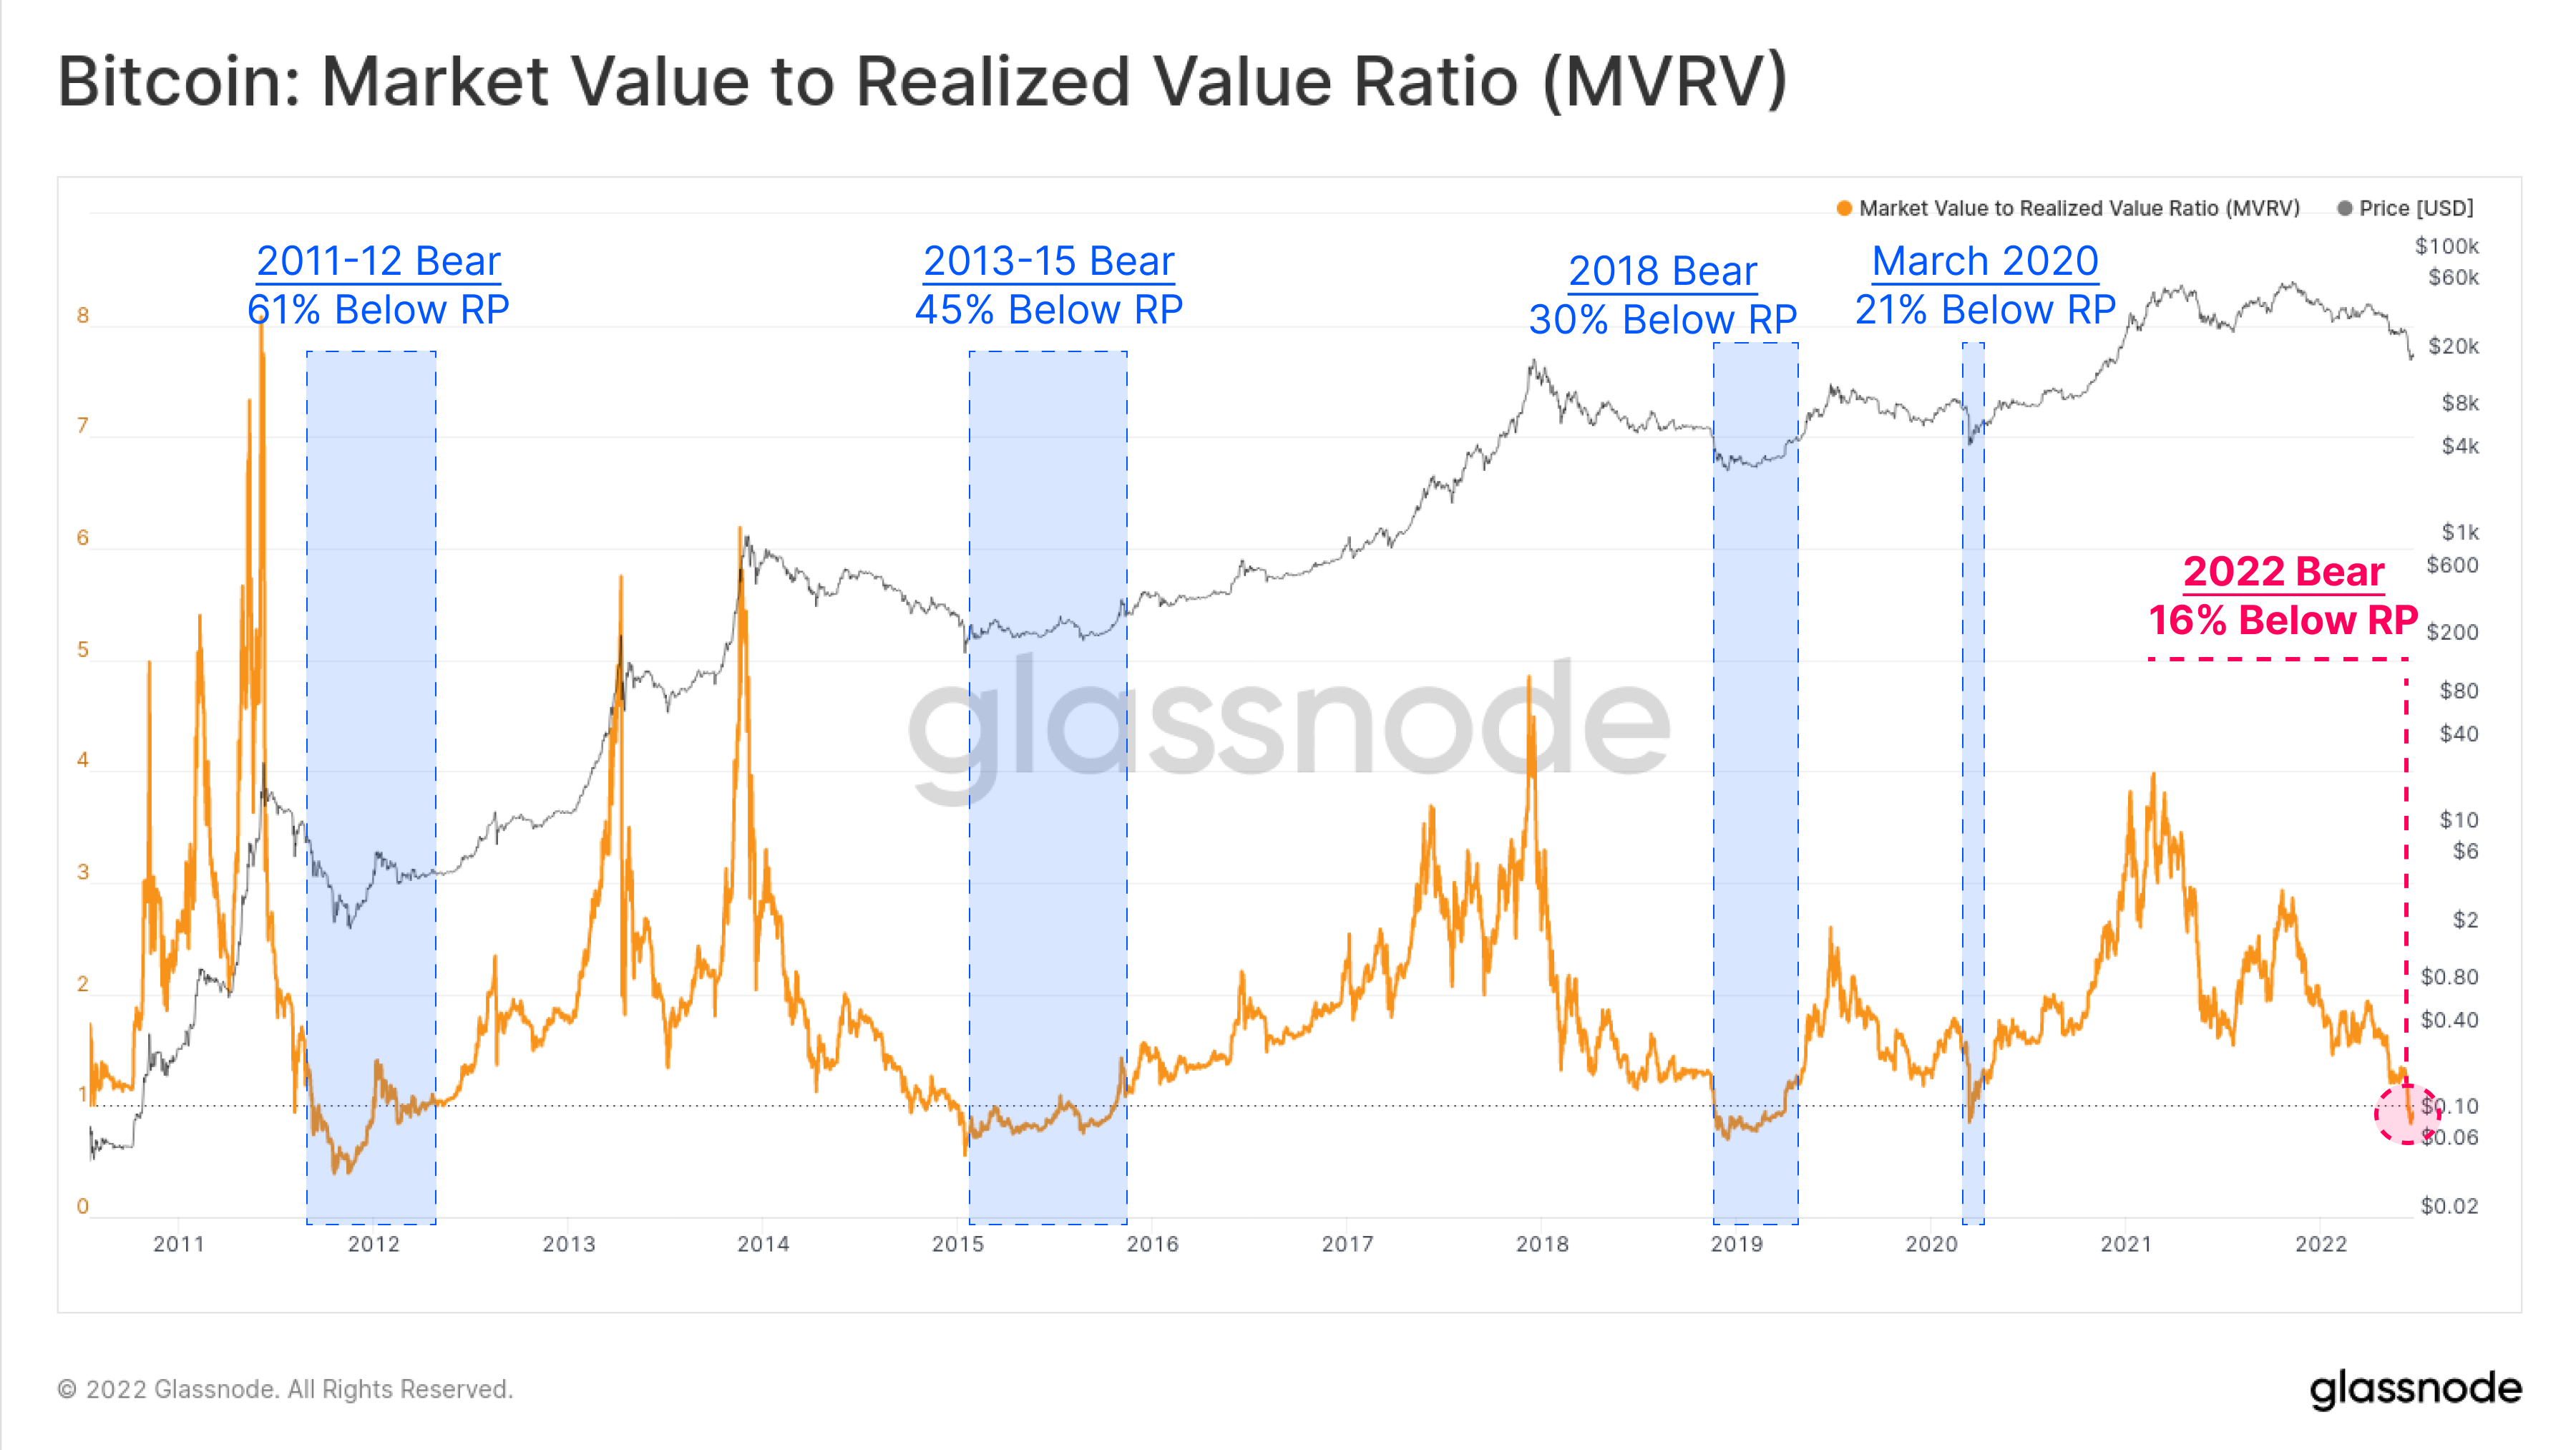 Glassnode Report Says Bitcoin's 2022 Price Drop Represents a Bear Market of 'Historic Proportions'